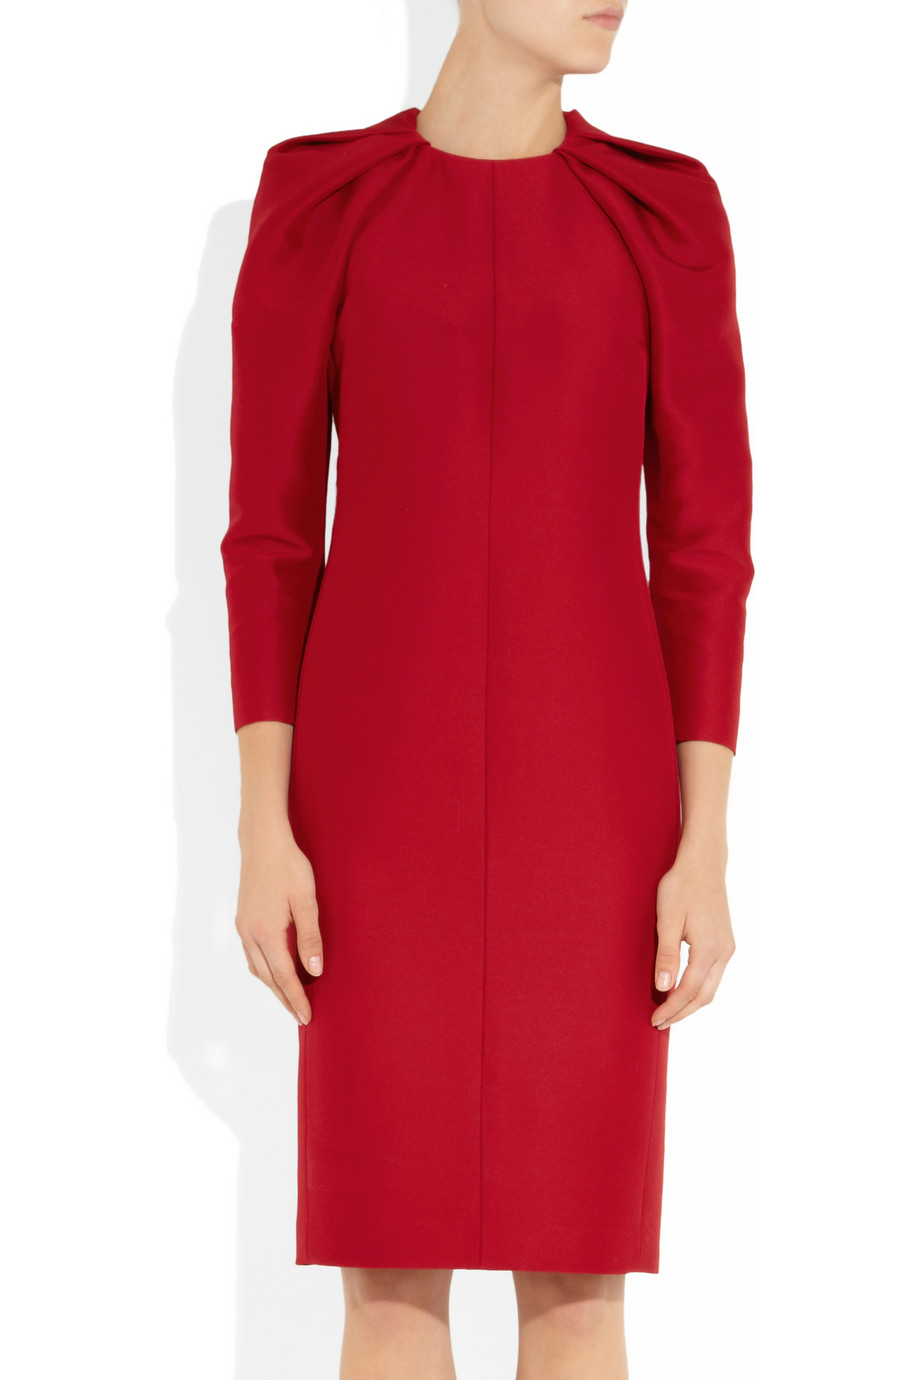 Giambattista valli Pleated Wool and Silk Blend Dress in Red | Lyst